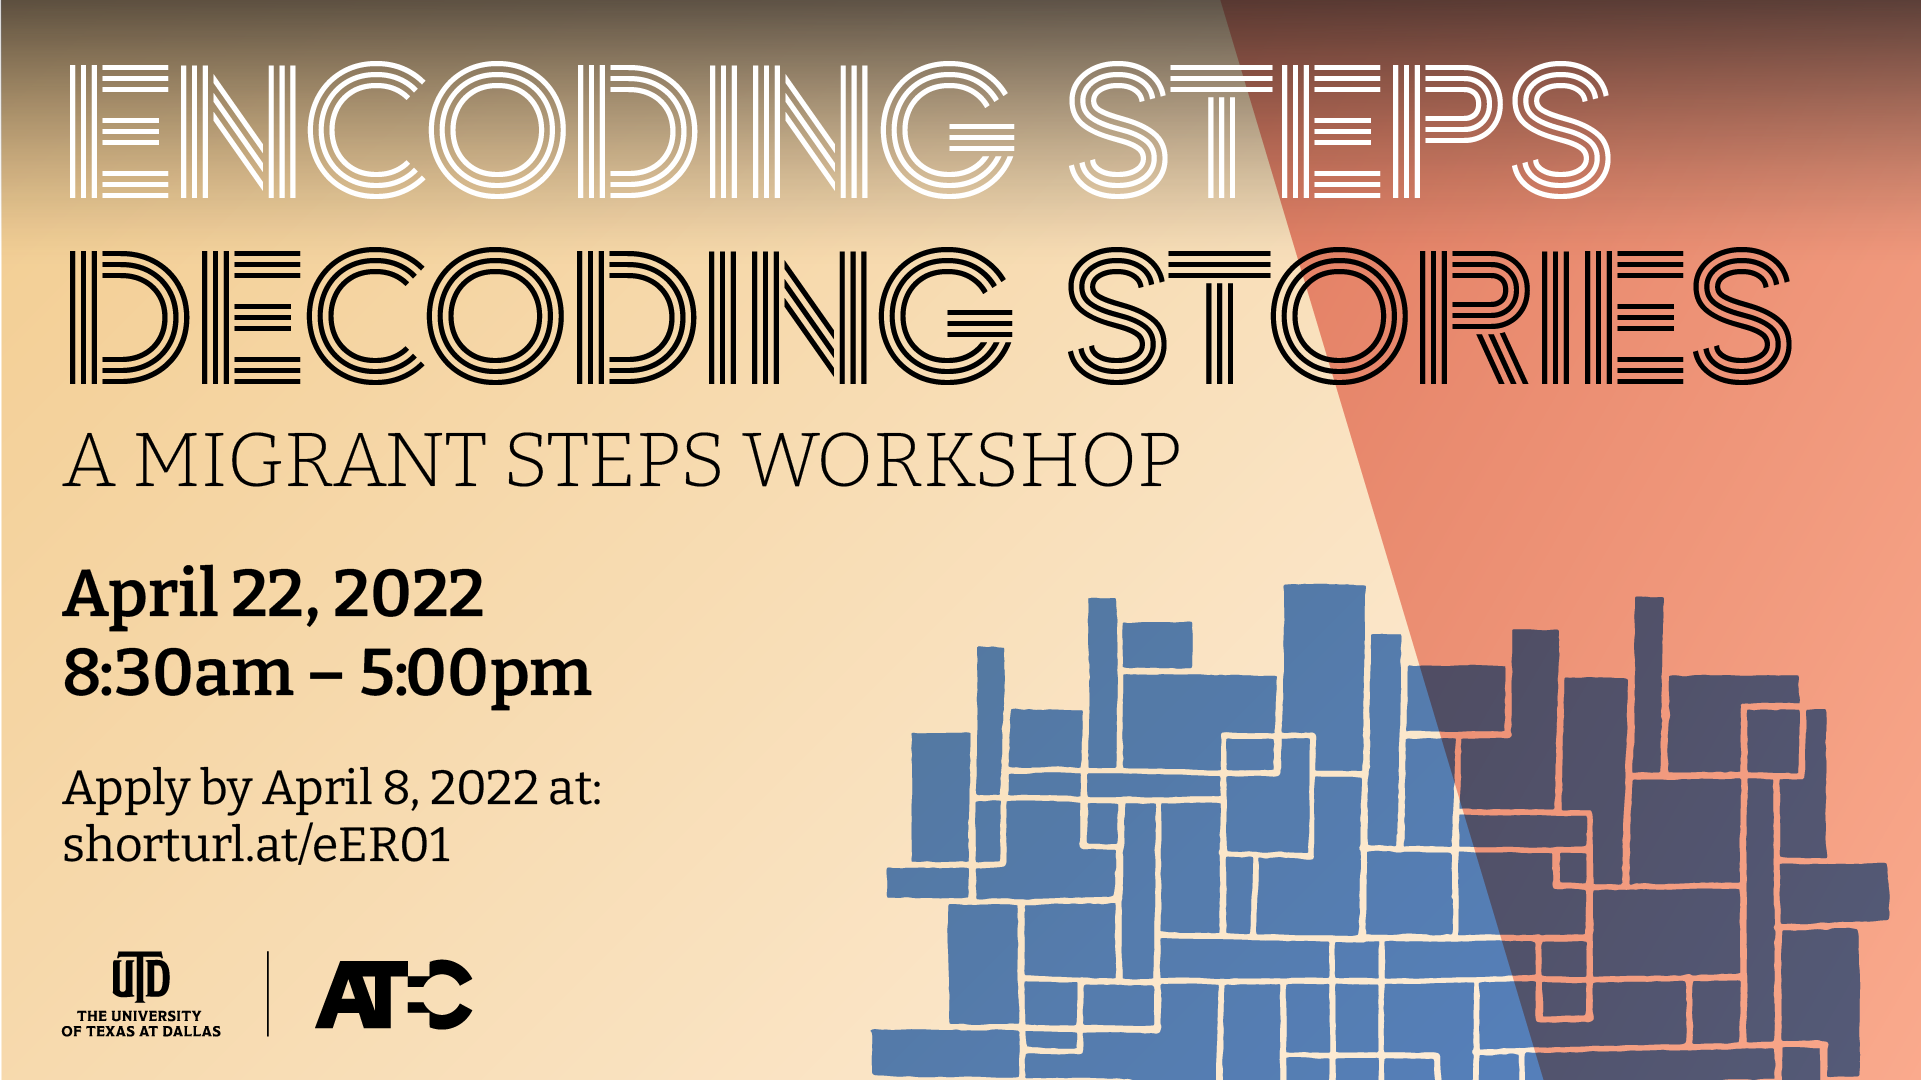 Encoding Steps, Decoding Stories: A Migrant Steps Workshop